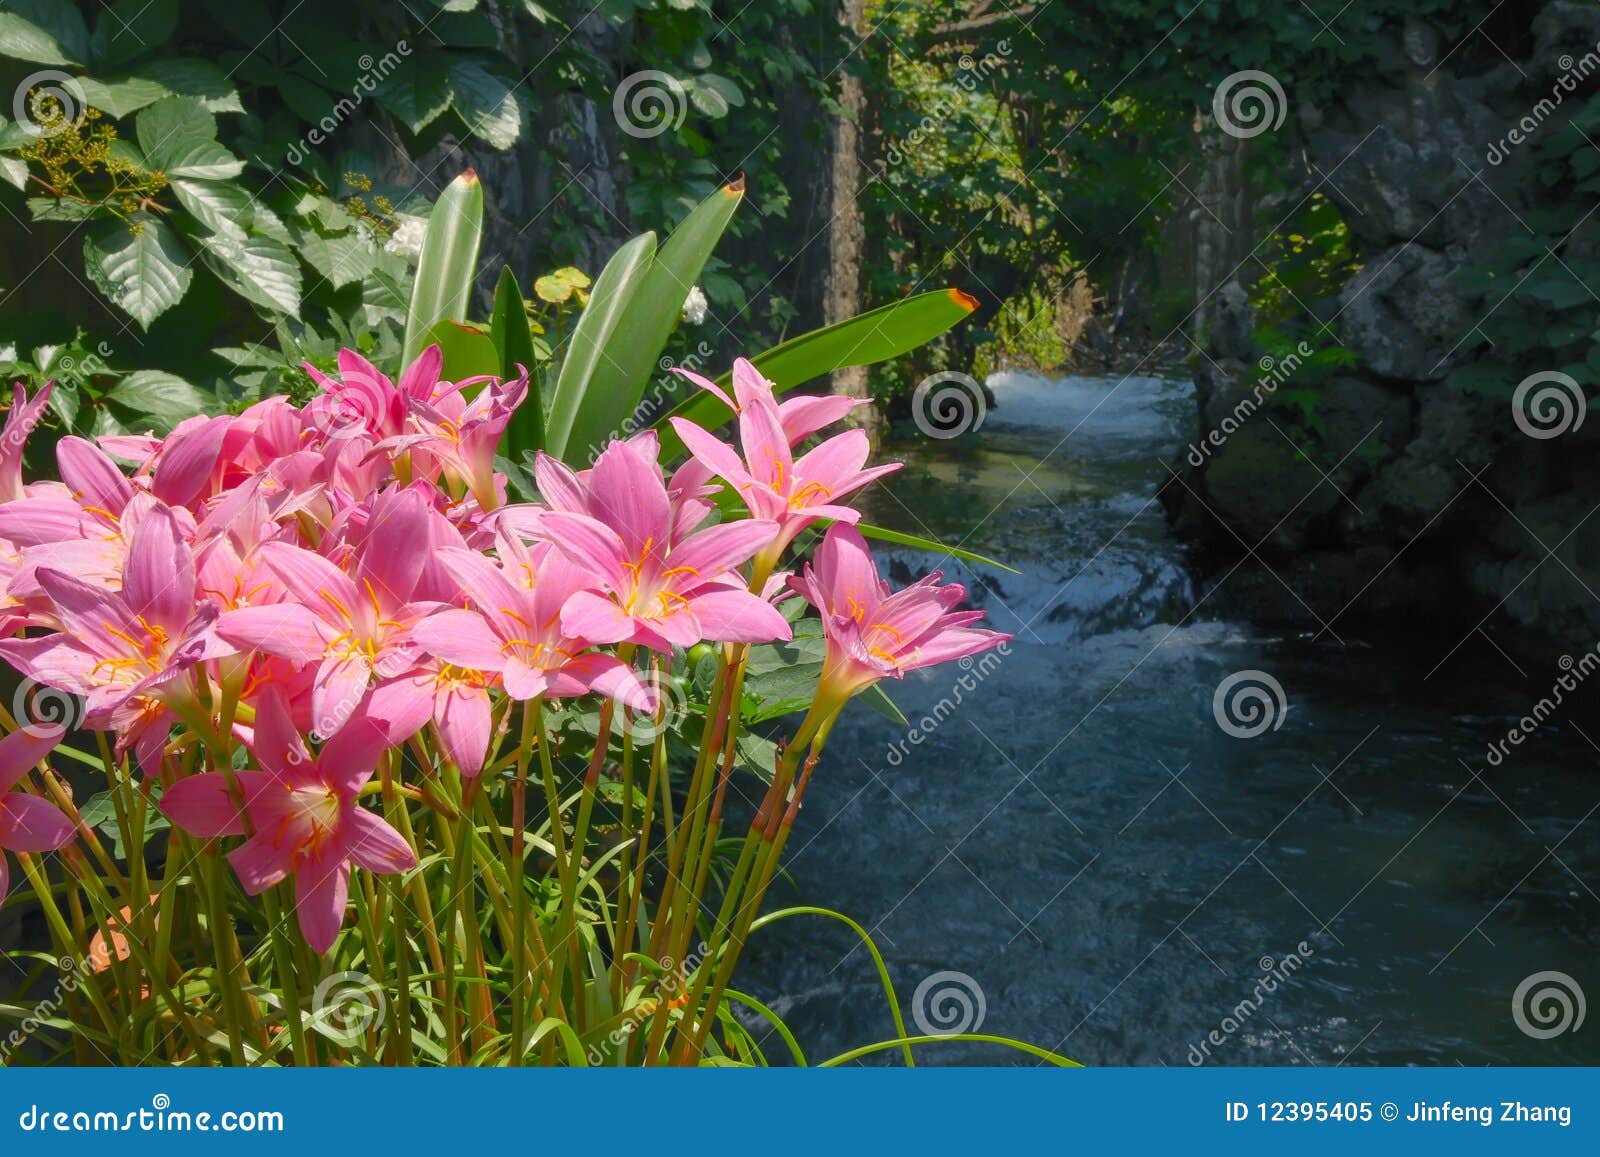 waterside flowers